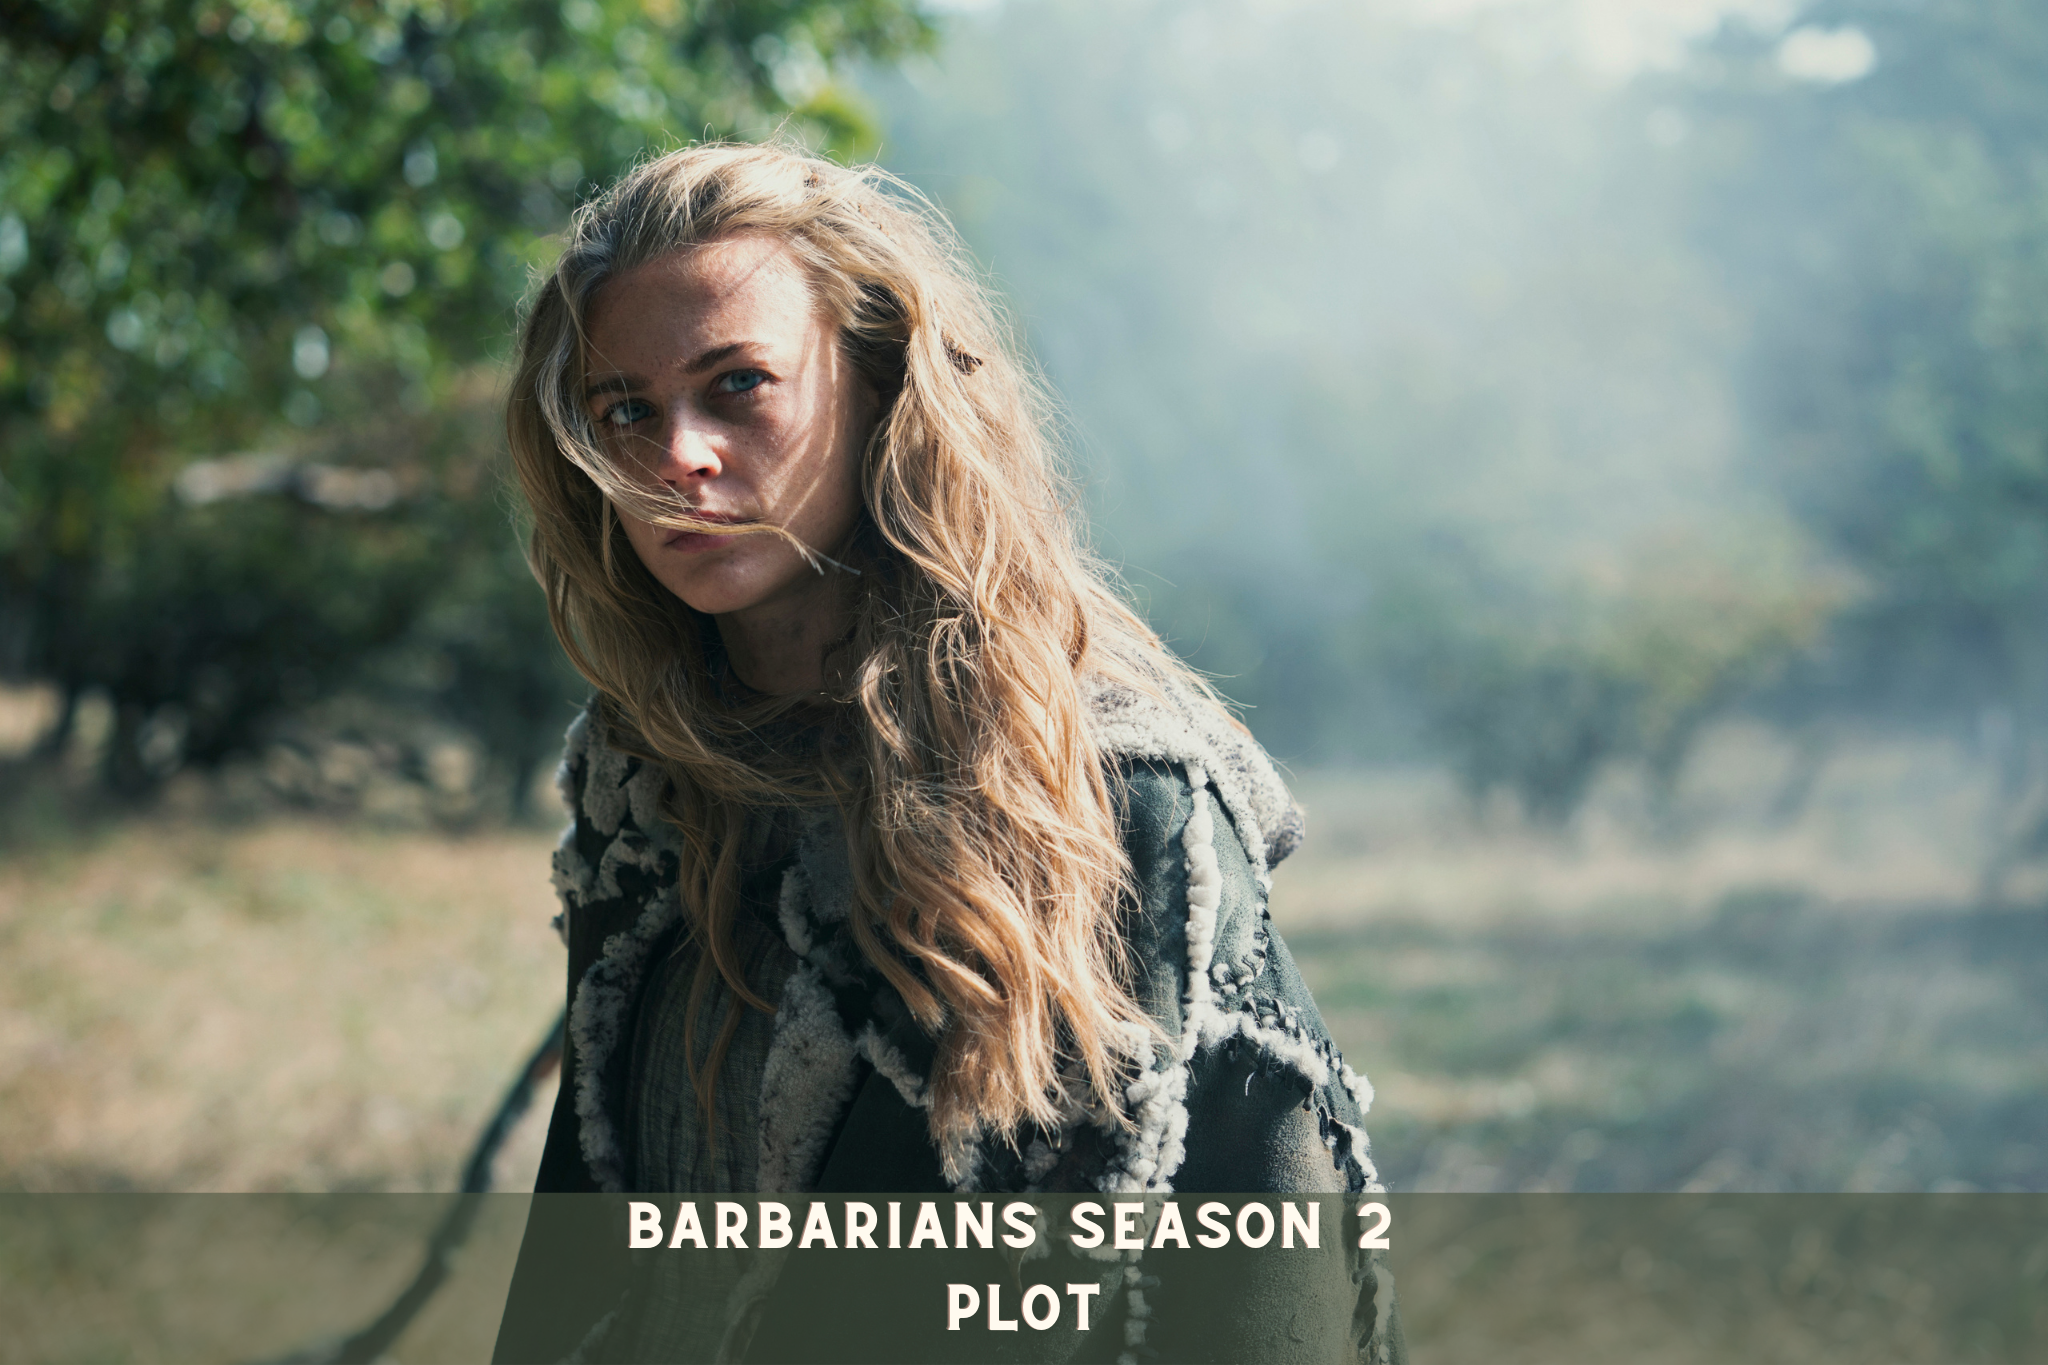 Barbarians Season 2 Plot